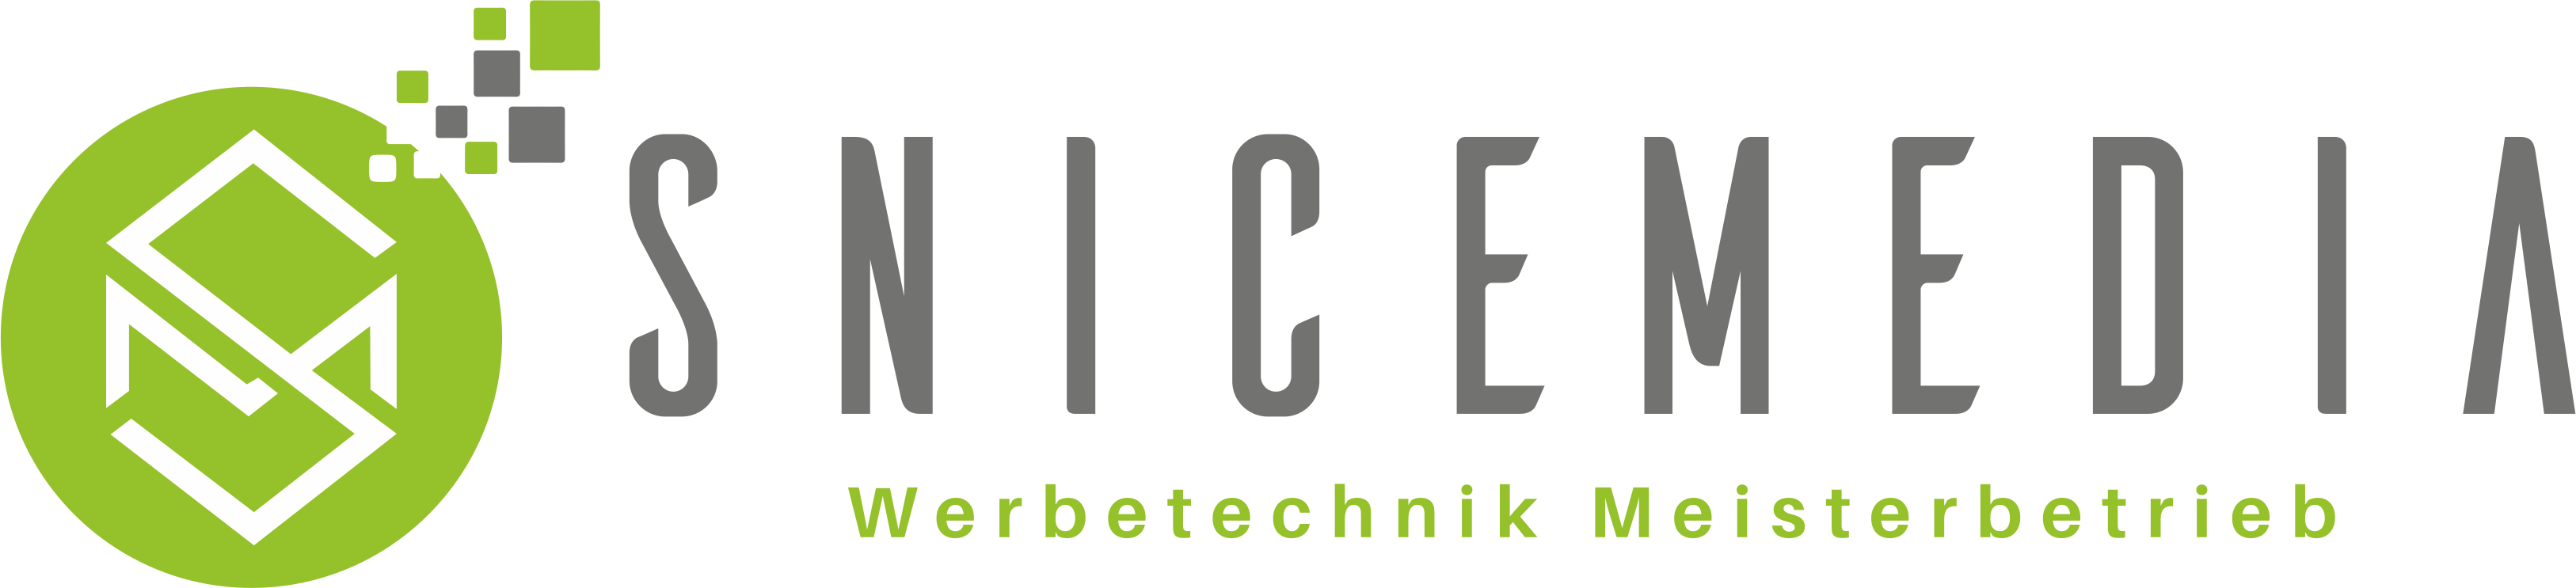 Logo Snicemedia